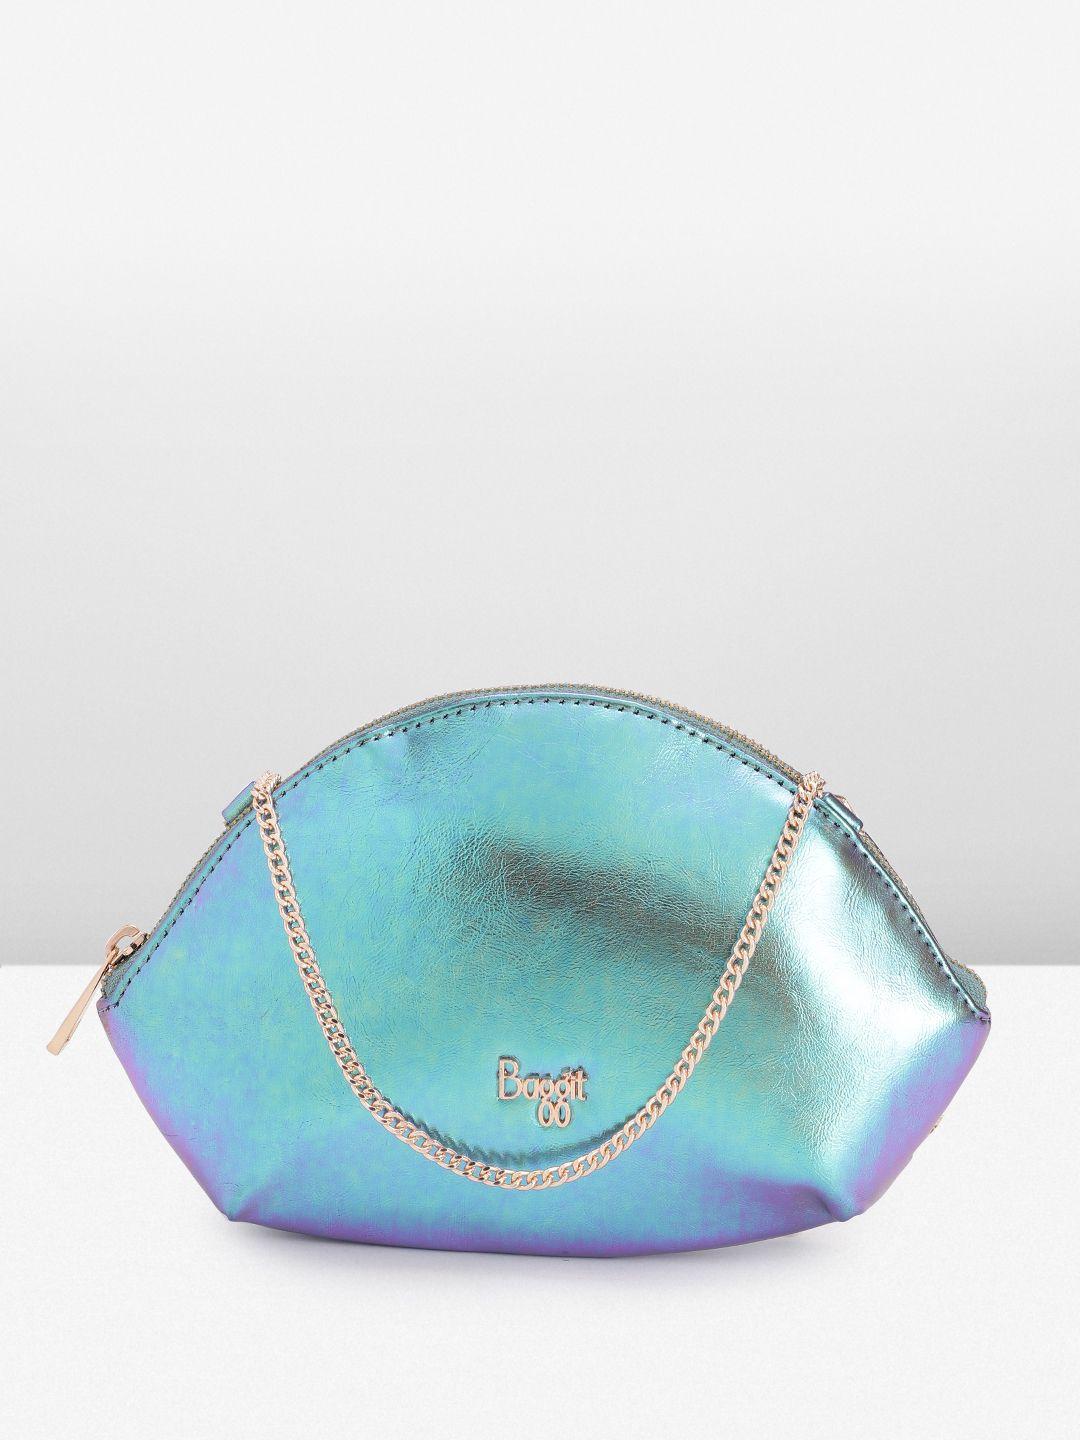 baggit-women-iridescent-purse-clutch